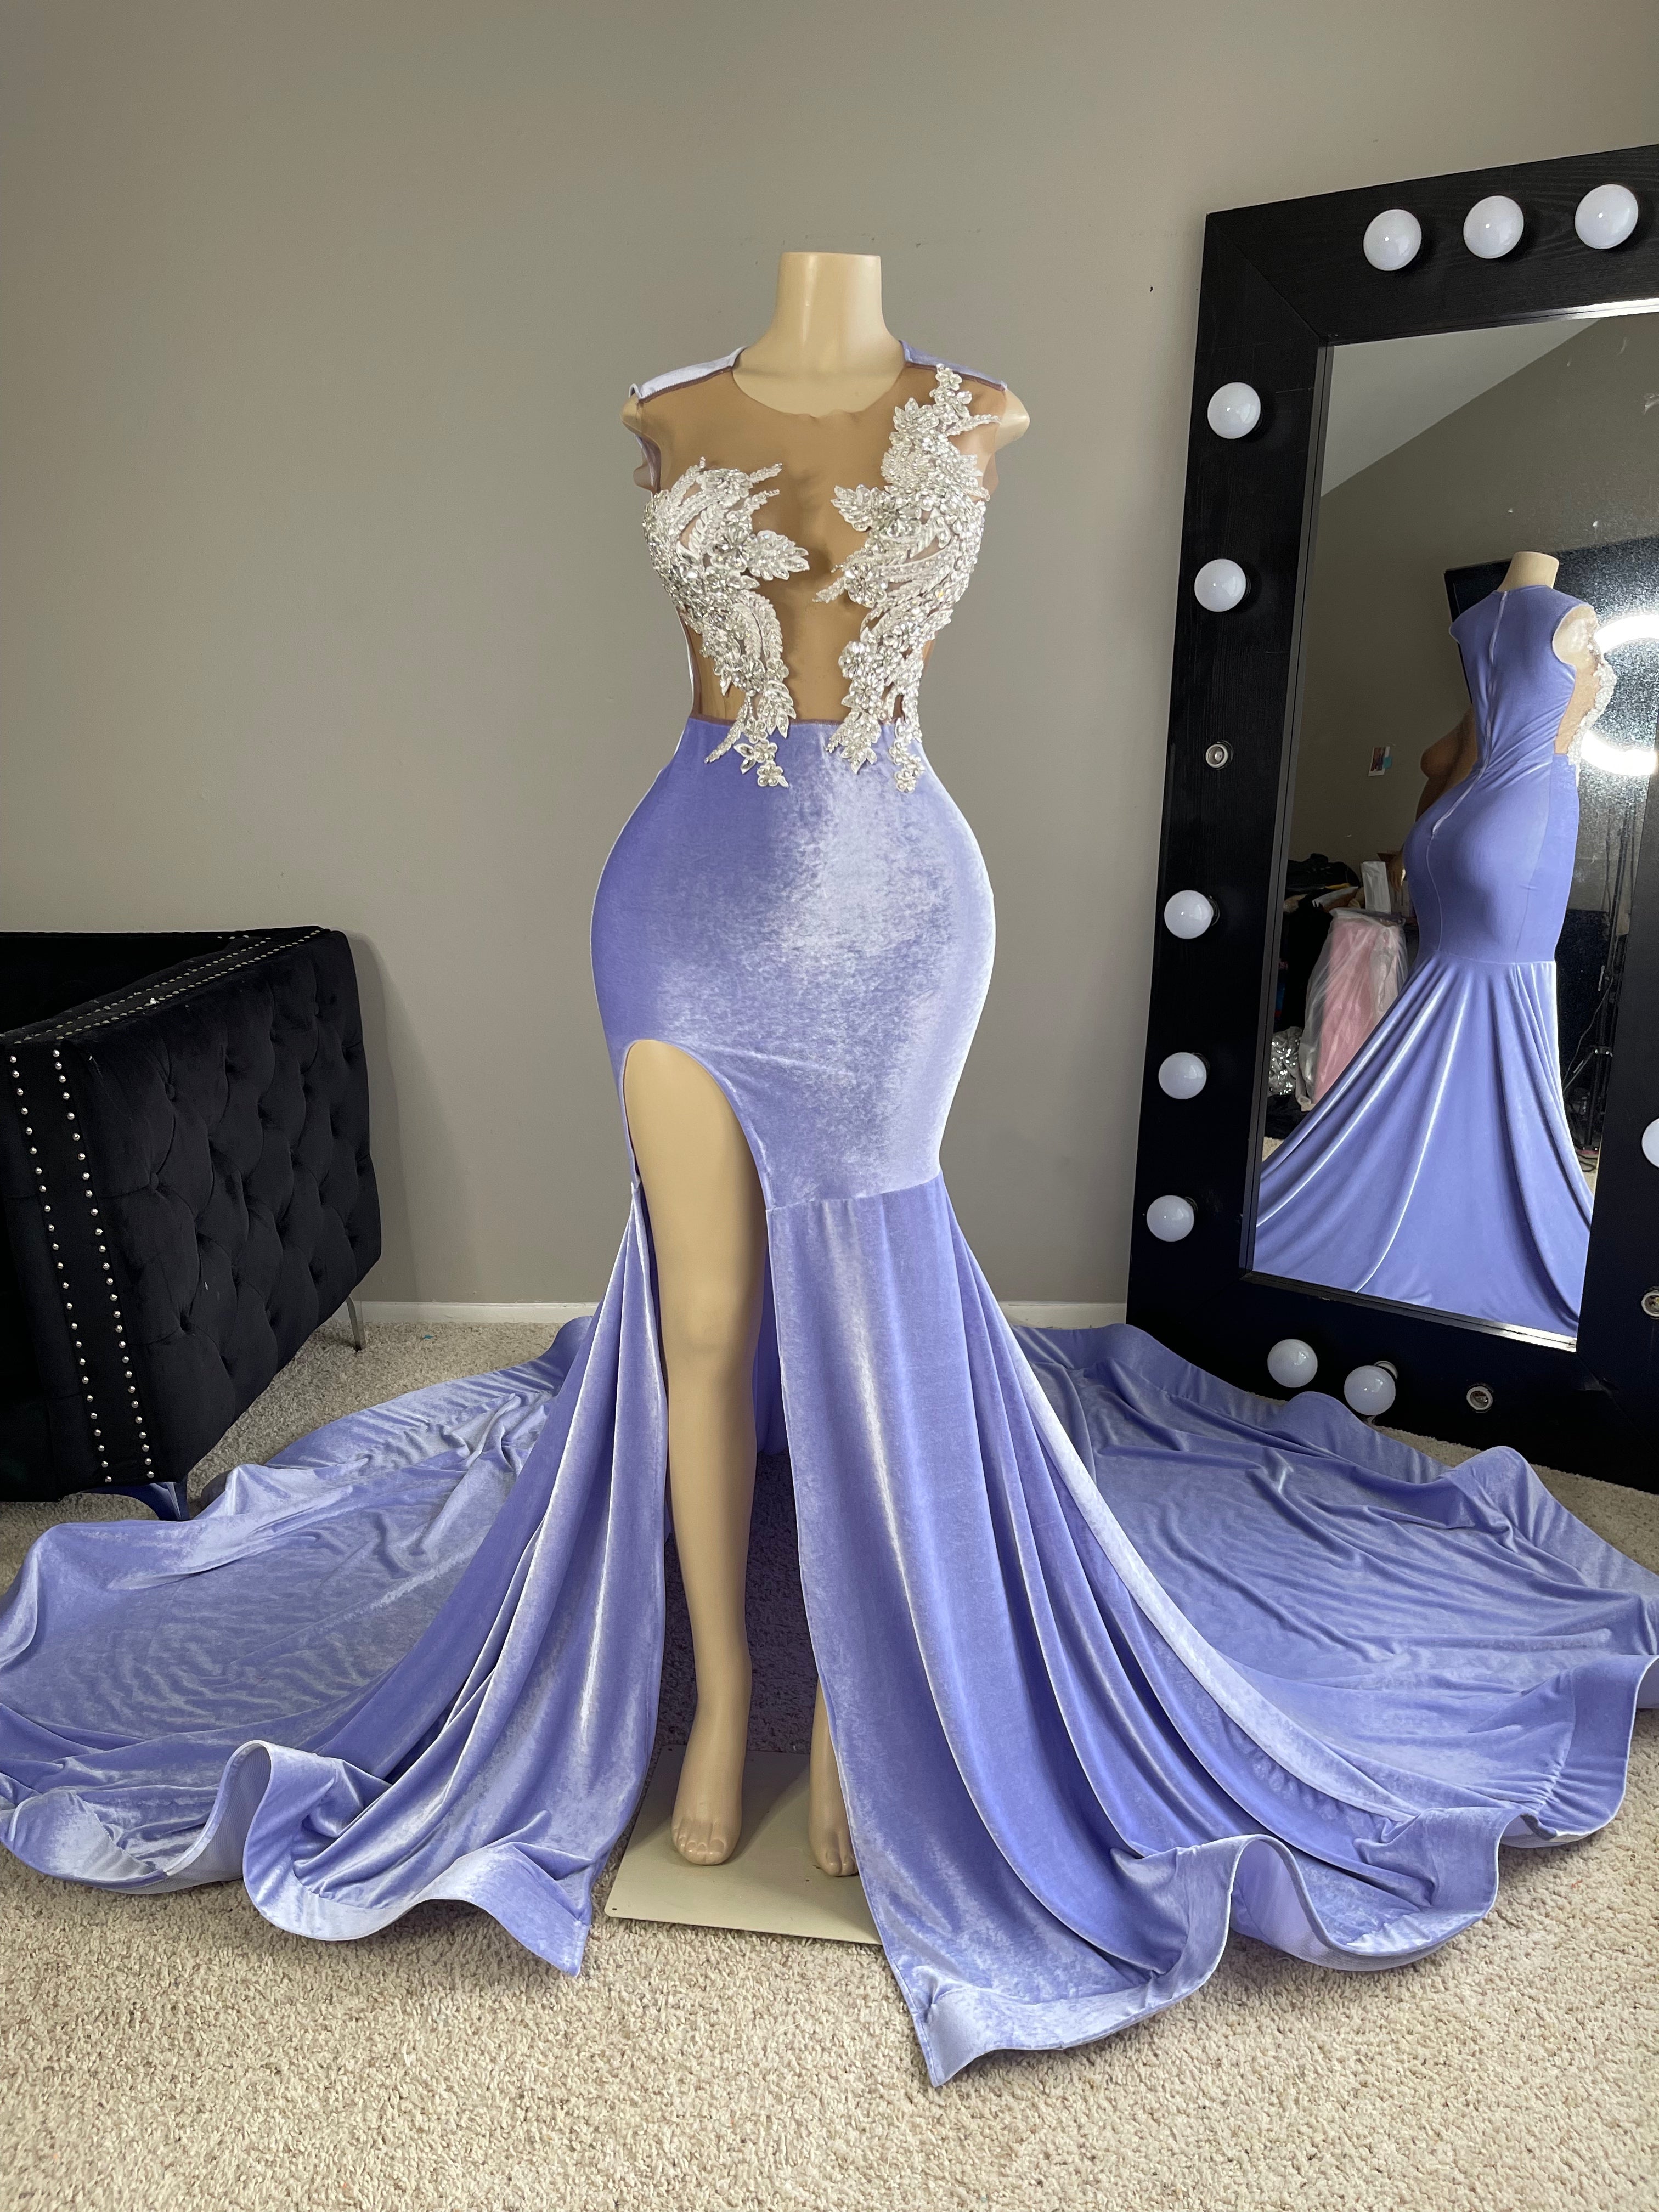 The Kenya Dress - Lavendar Purple Dress with Split with Rhinestones